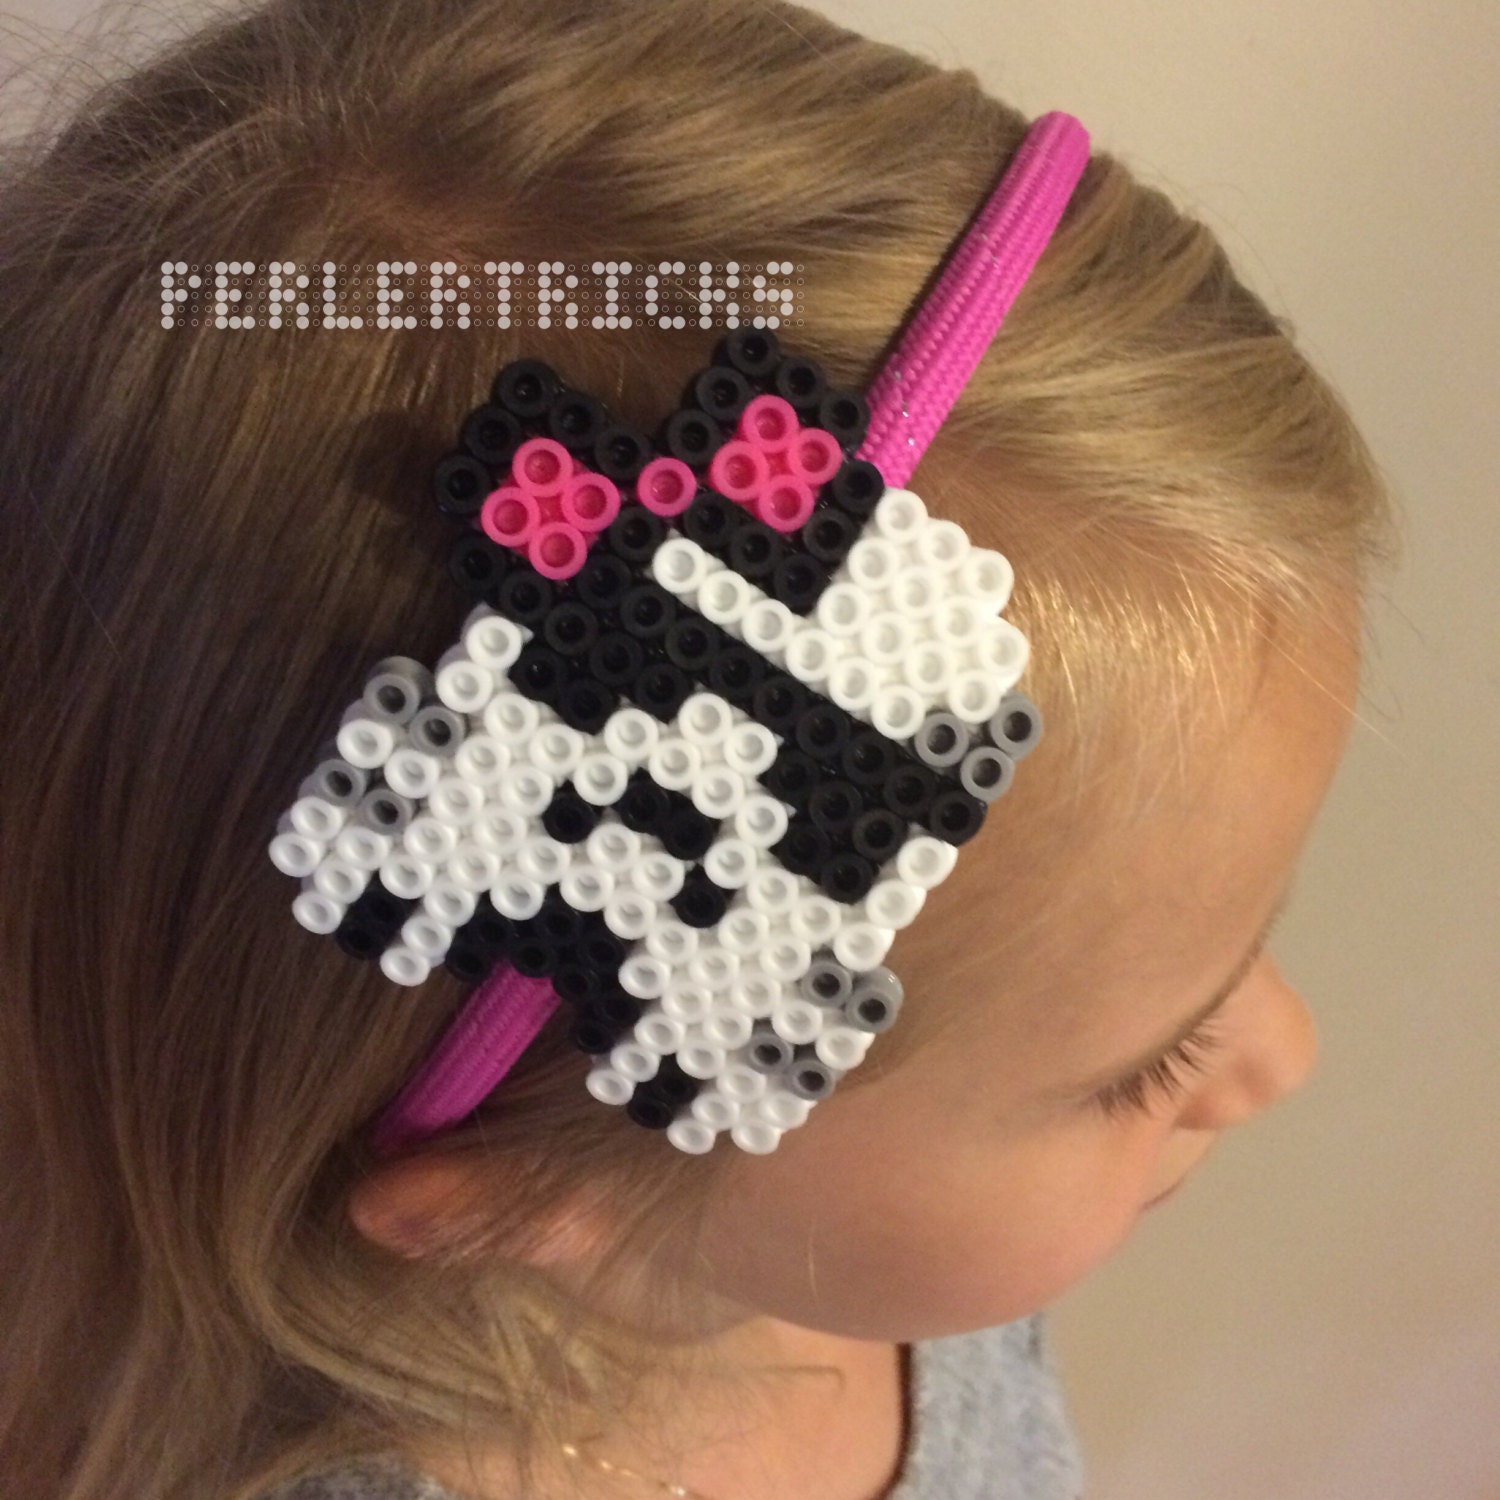 PerlerTricks Black and Red 8 Bit Pixel Art Perler Bead Headband - Perlers Gamer Geek Hair Accessory Hama Melty Beads Retro Girl Cute Ball White